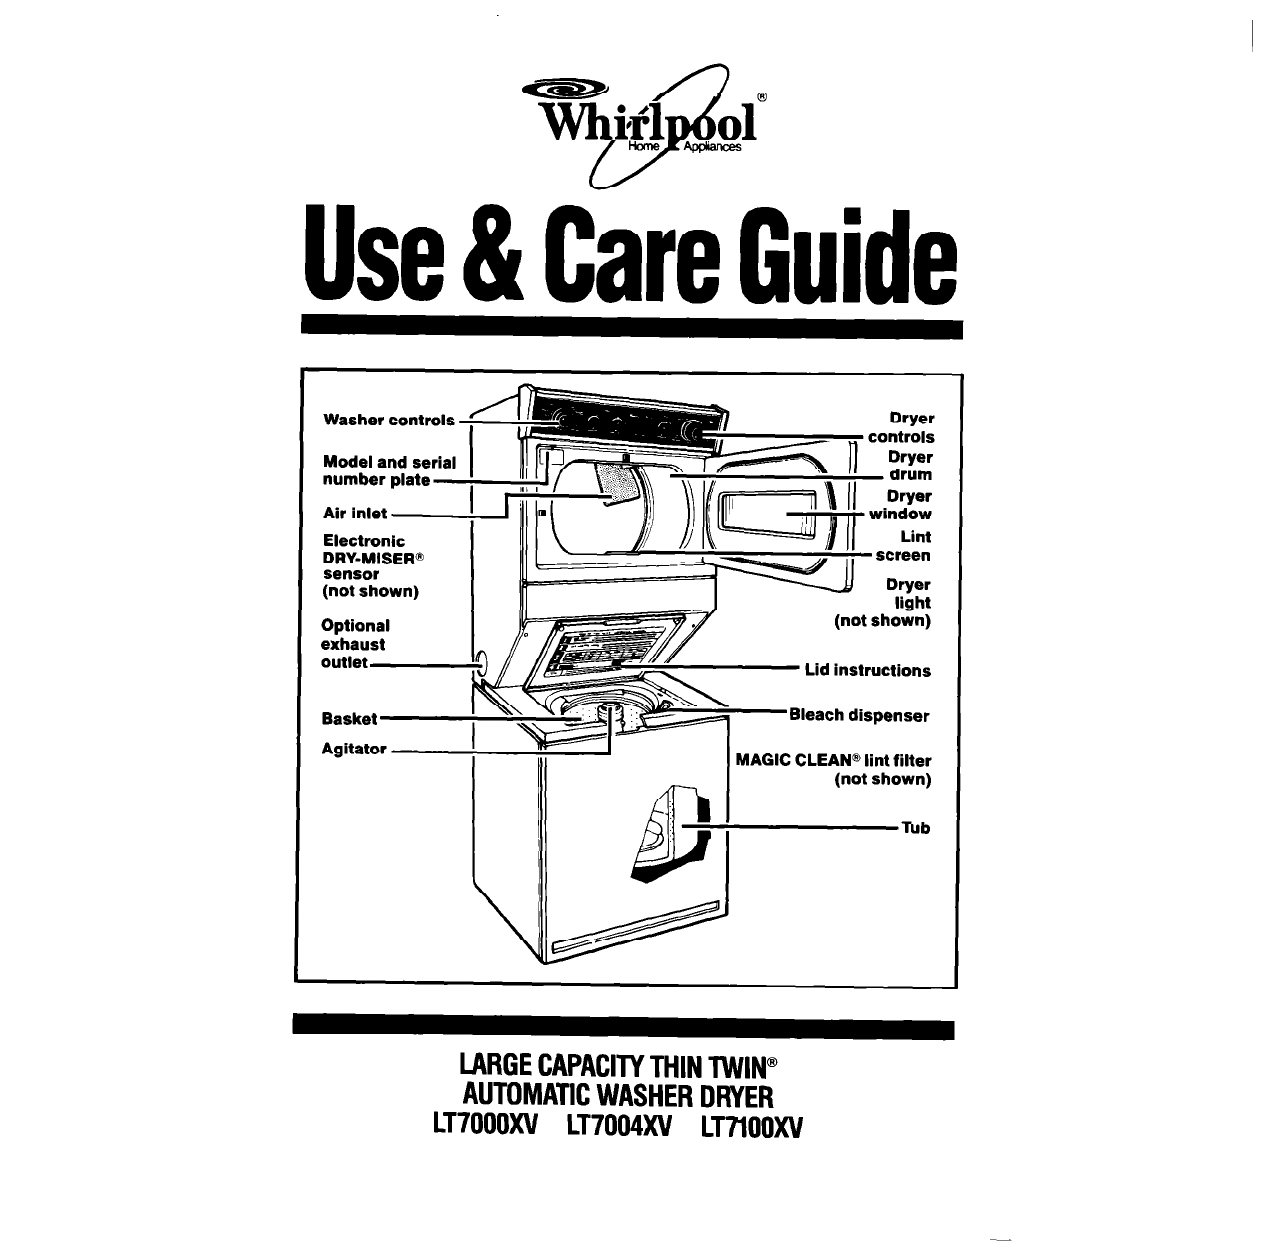 Kenmore Dryer User Manuals Download - ManualsLib